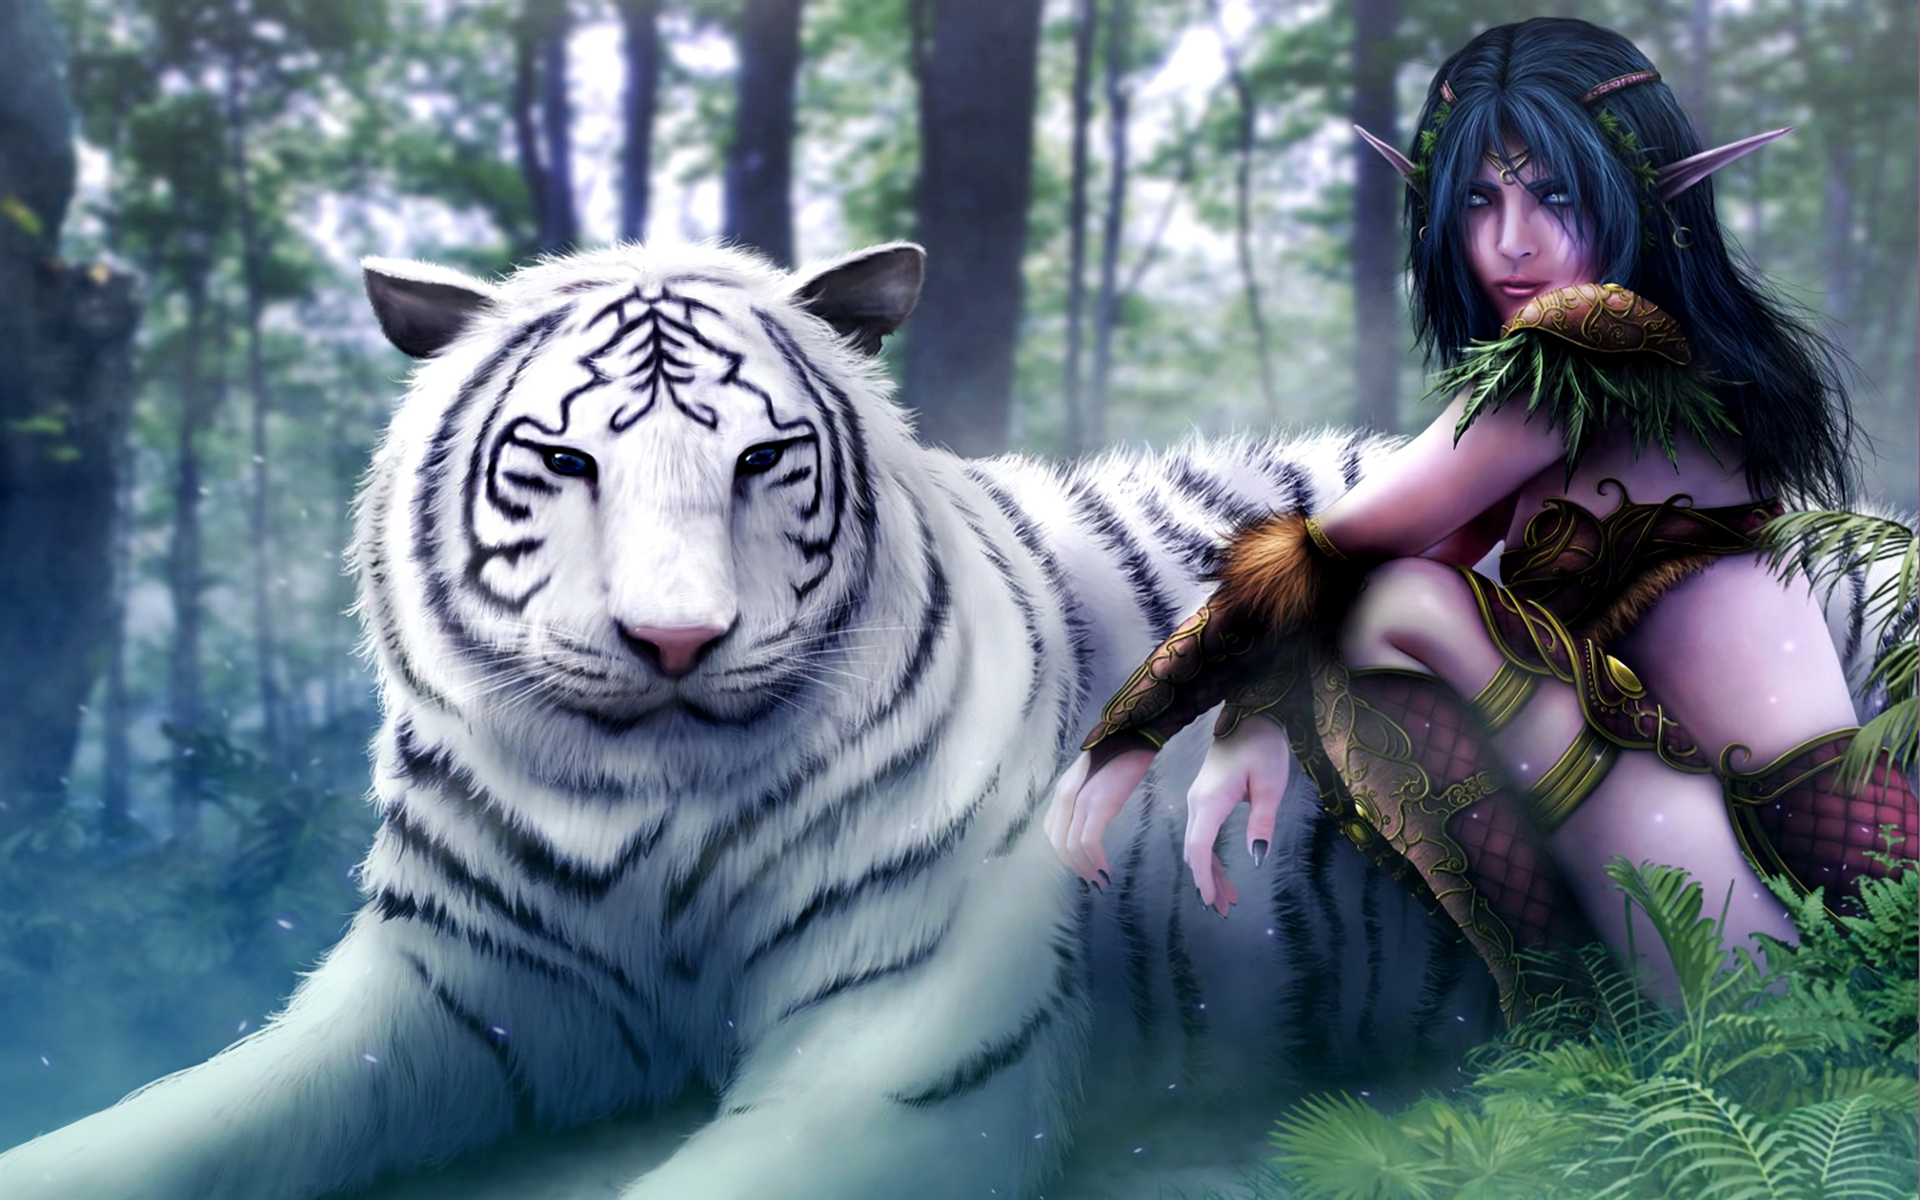 Fantasy Warrior with White Tiger